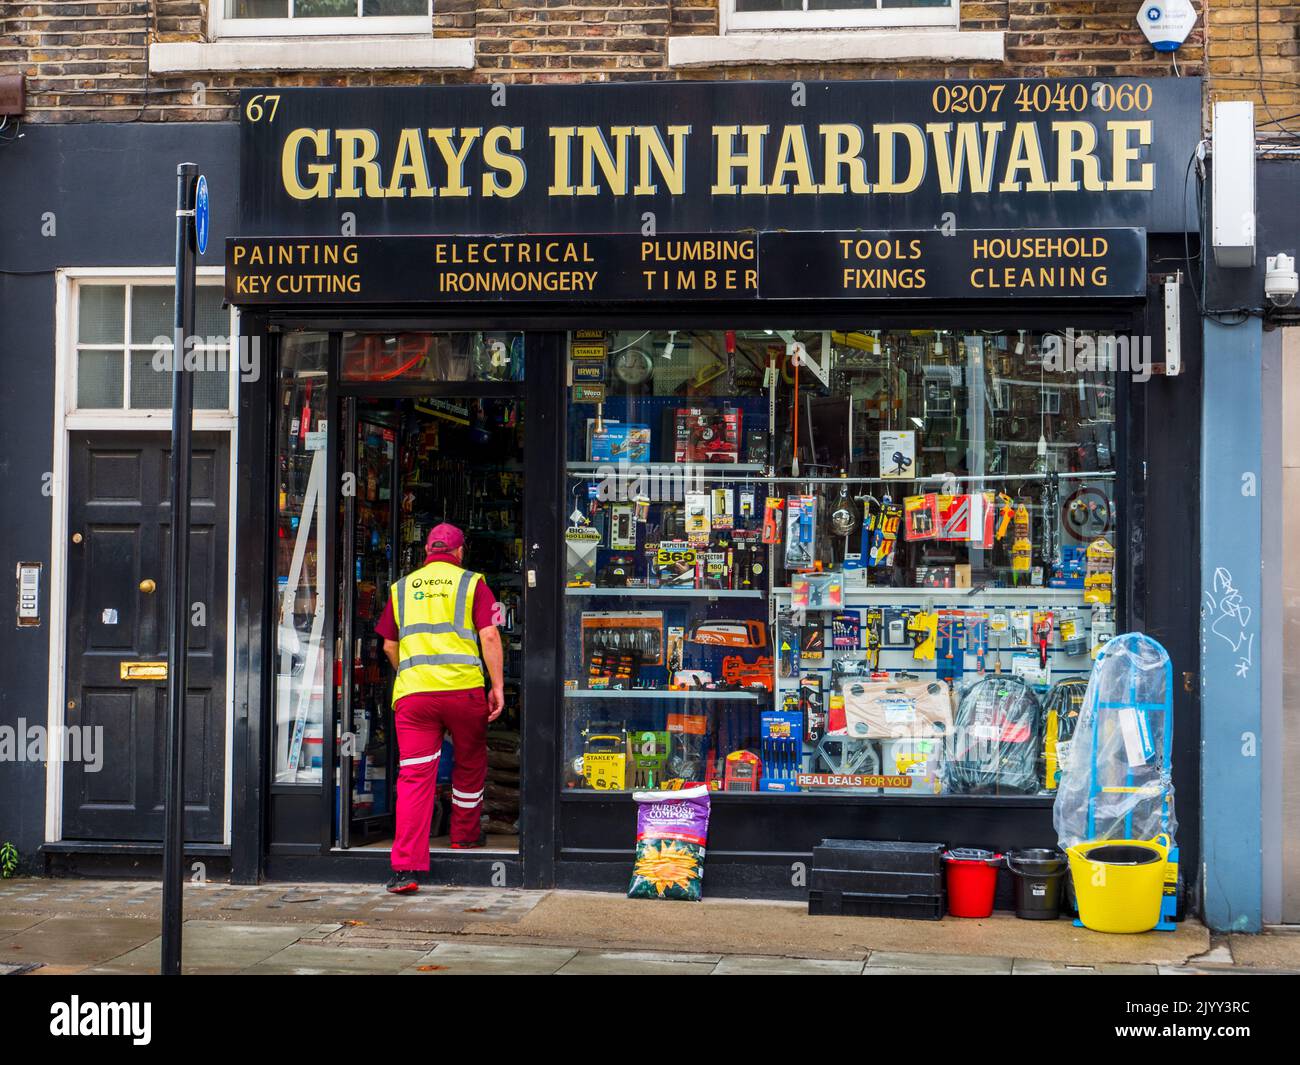 London hardware Store - Grays Inn hardware store in Grays Inn Road nel centro di Londra. Foto Stock